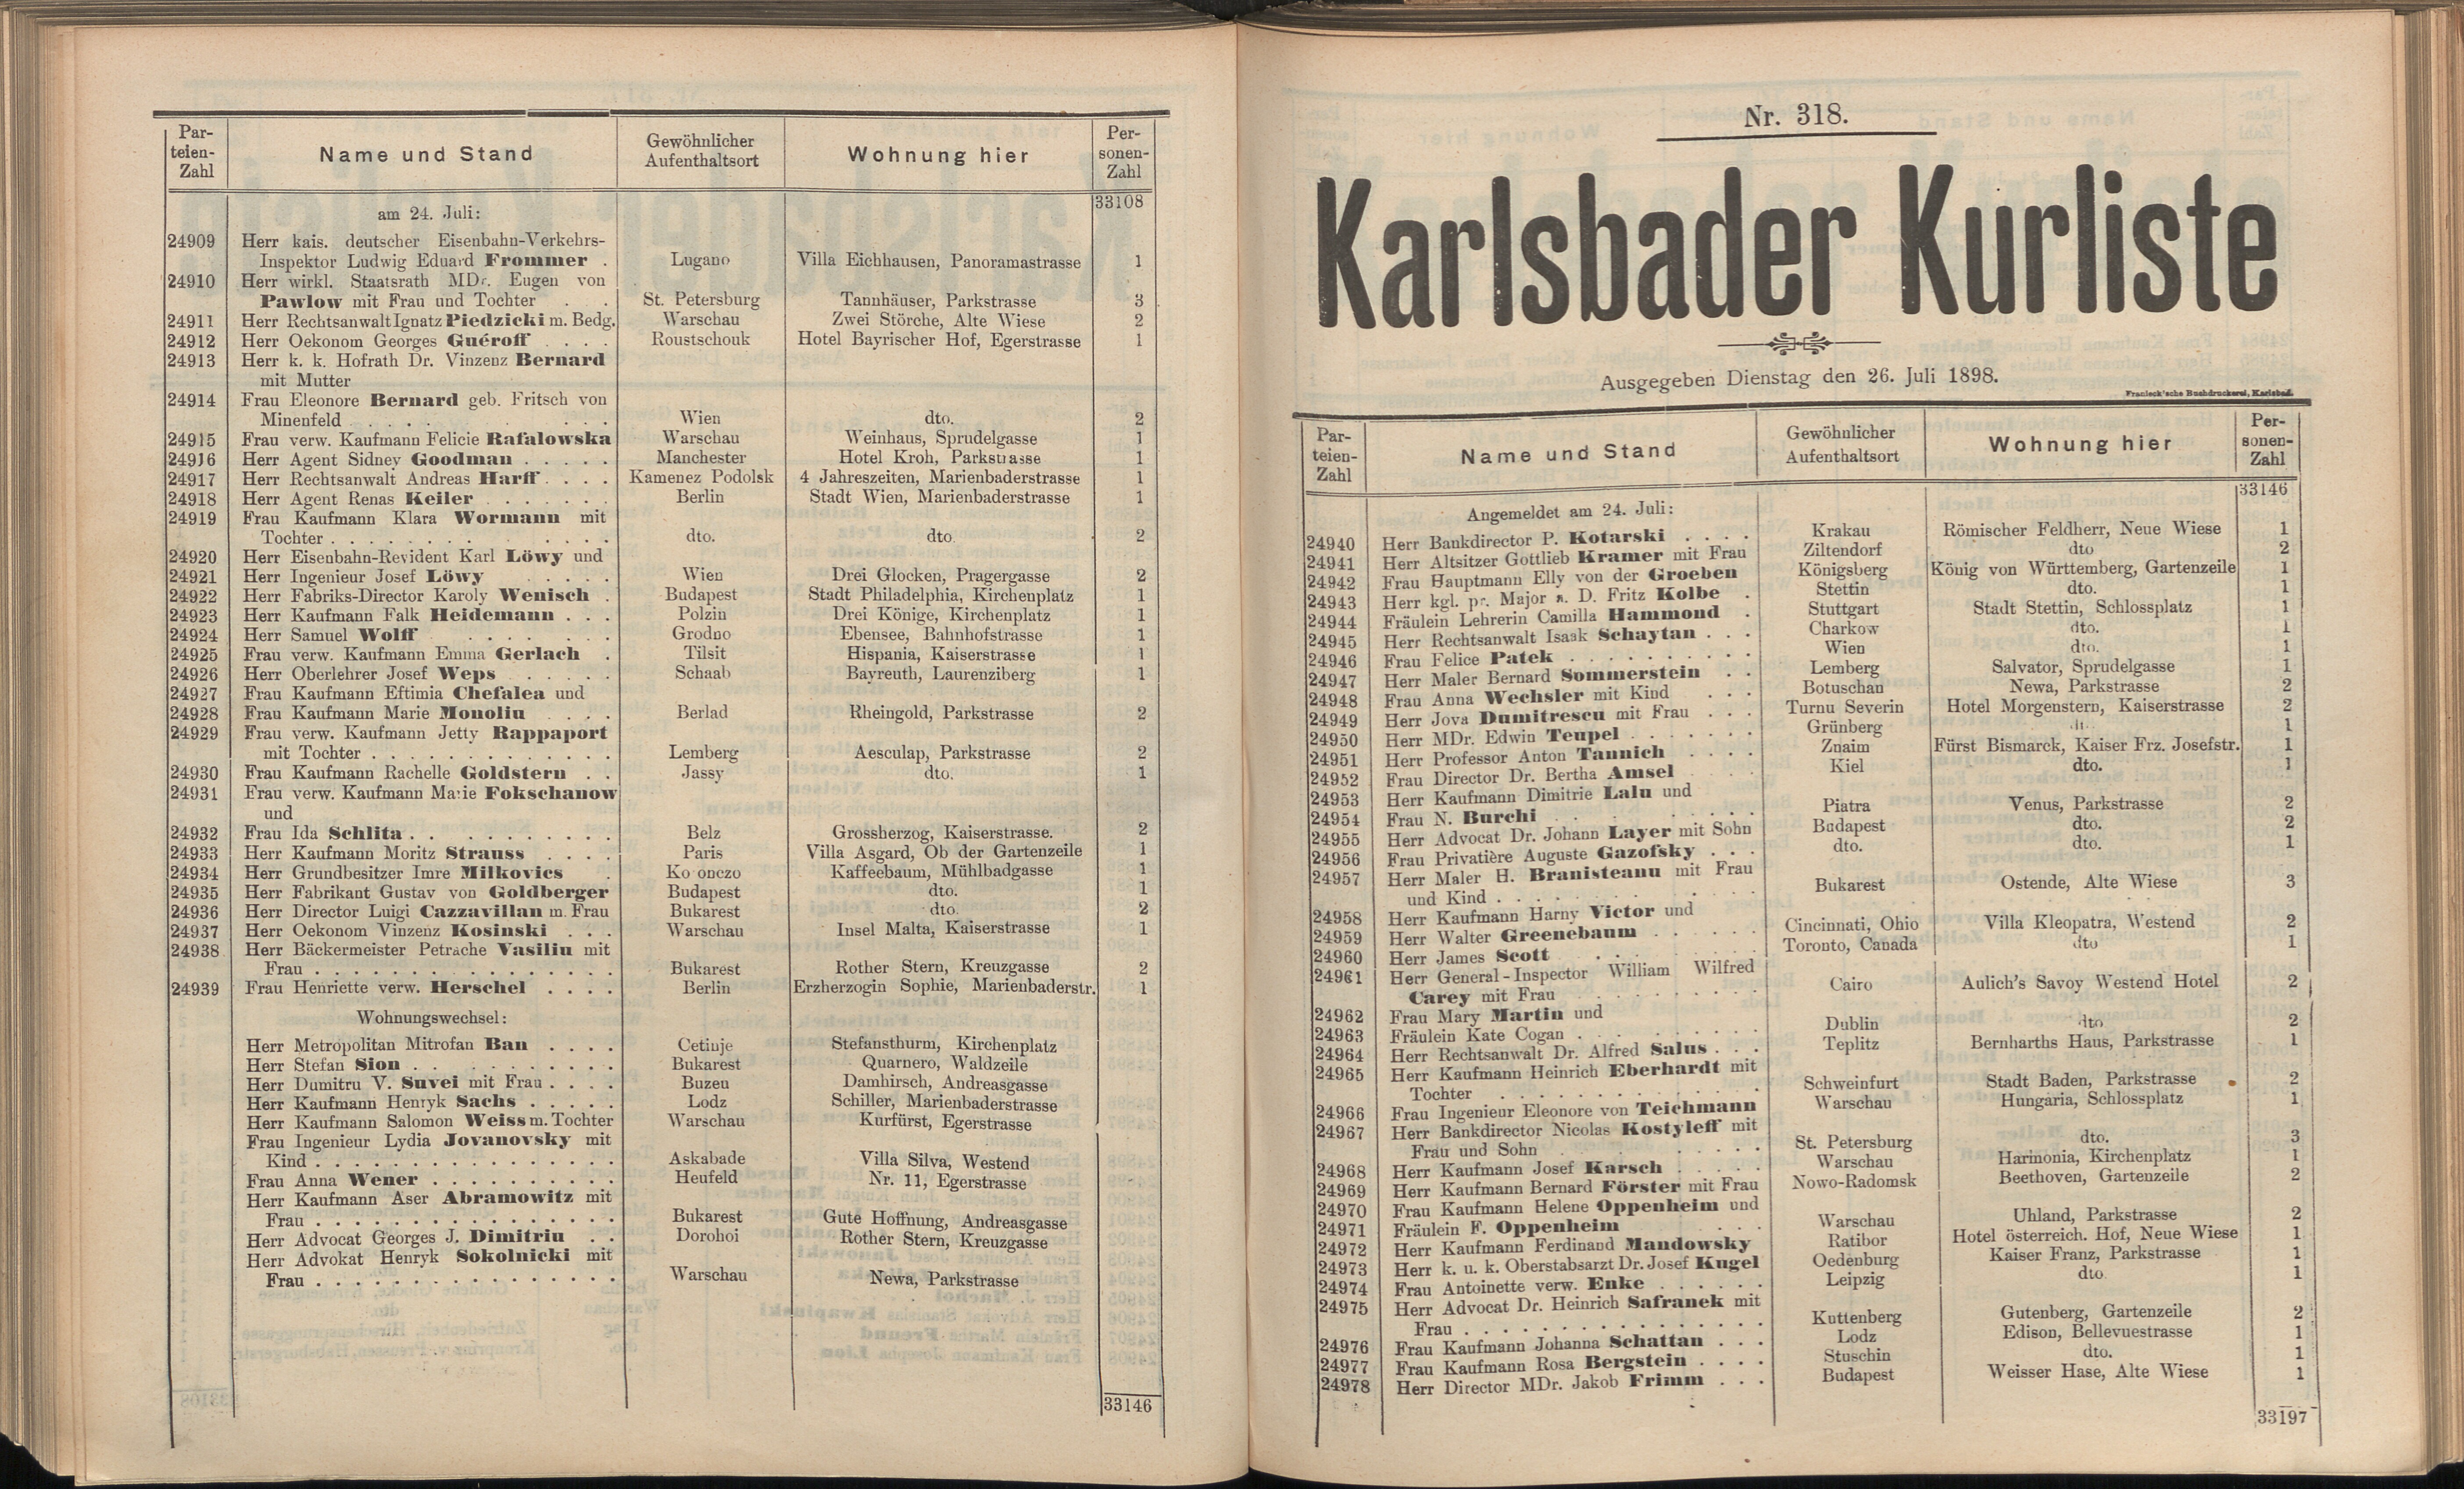 334. soap-kv_knihovna_karlsbader-kurliste-1898_3350